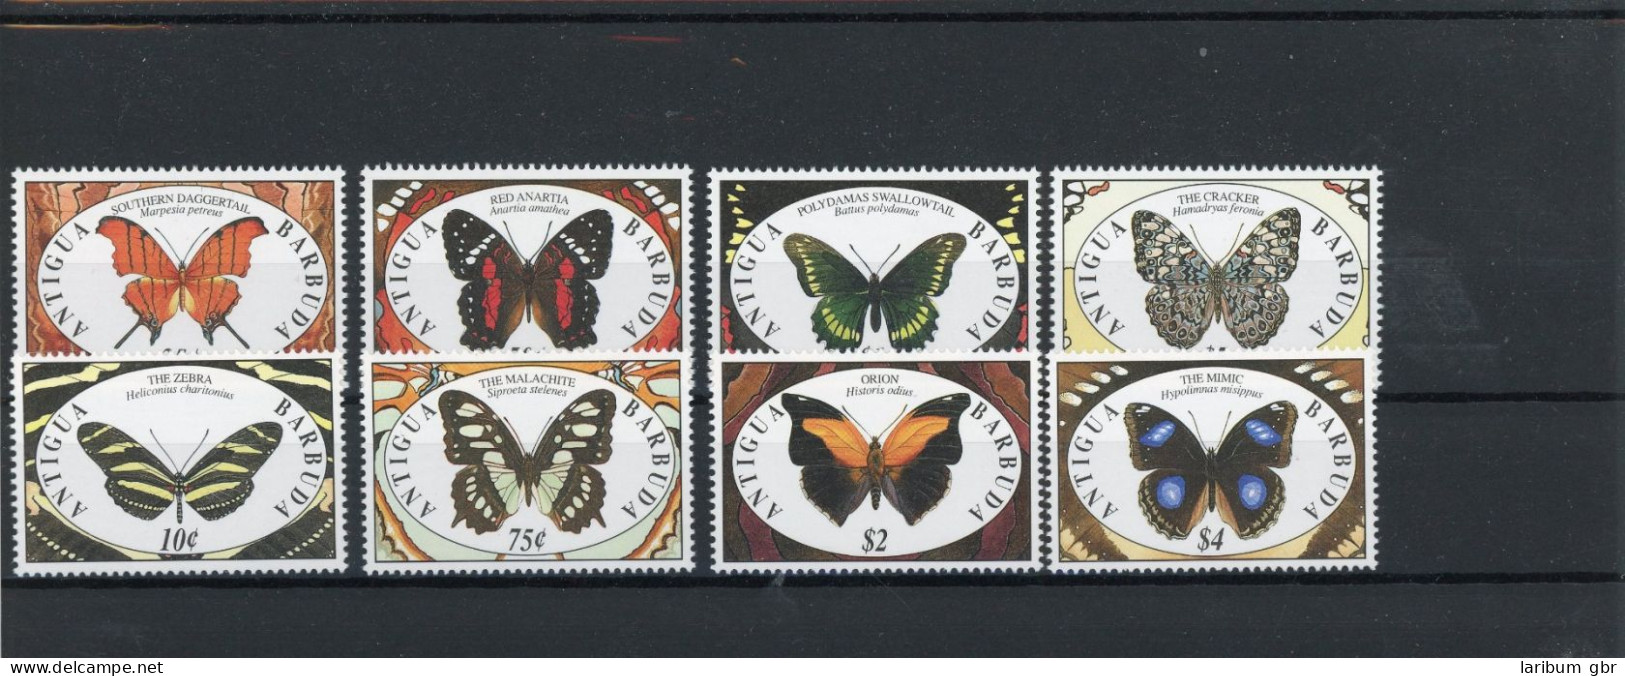 Antigua Und Barbuda 1475-1482 Postfrisch Schmetterlinge #JT992 - Antigua En Barbuda (1981-...)